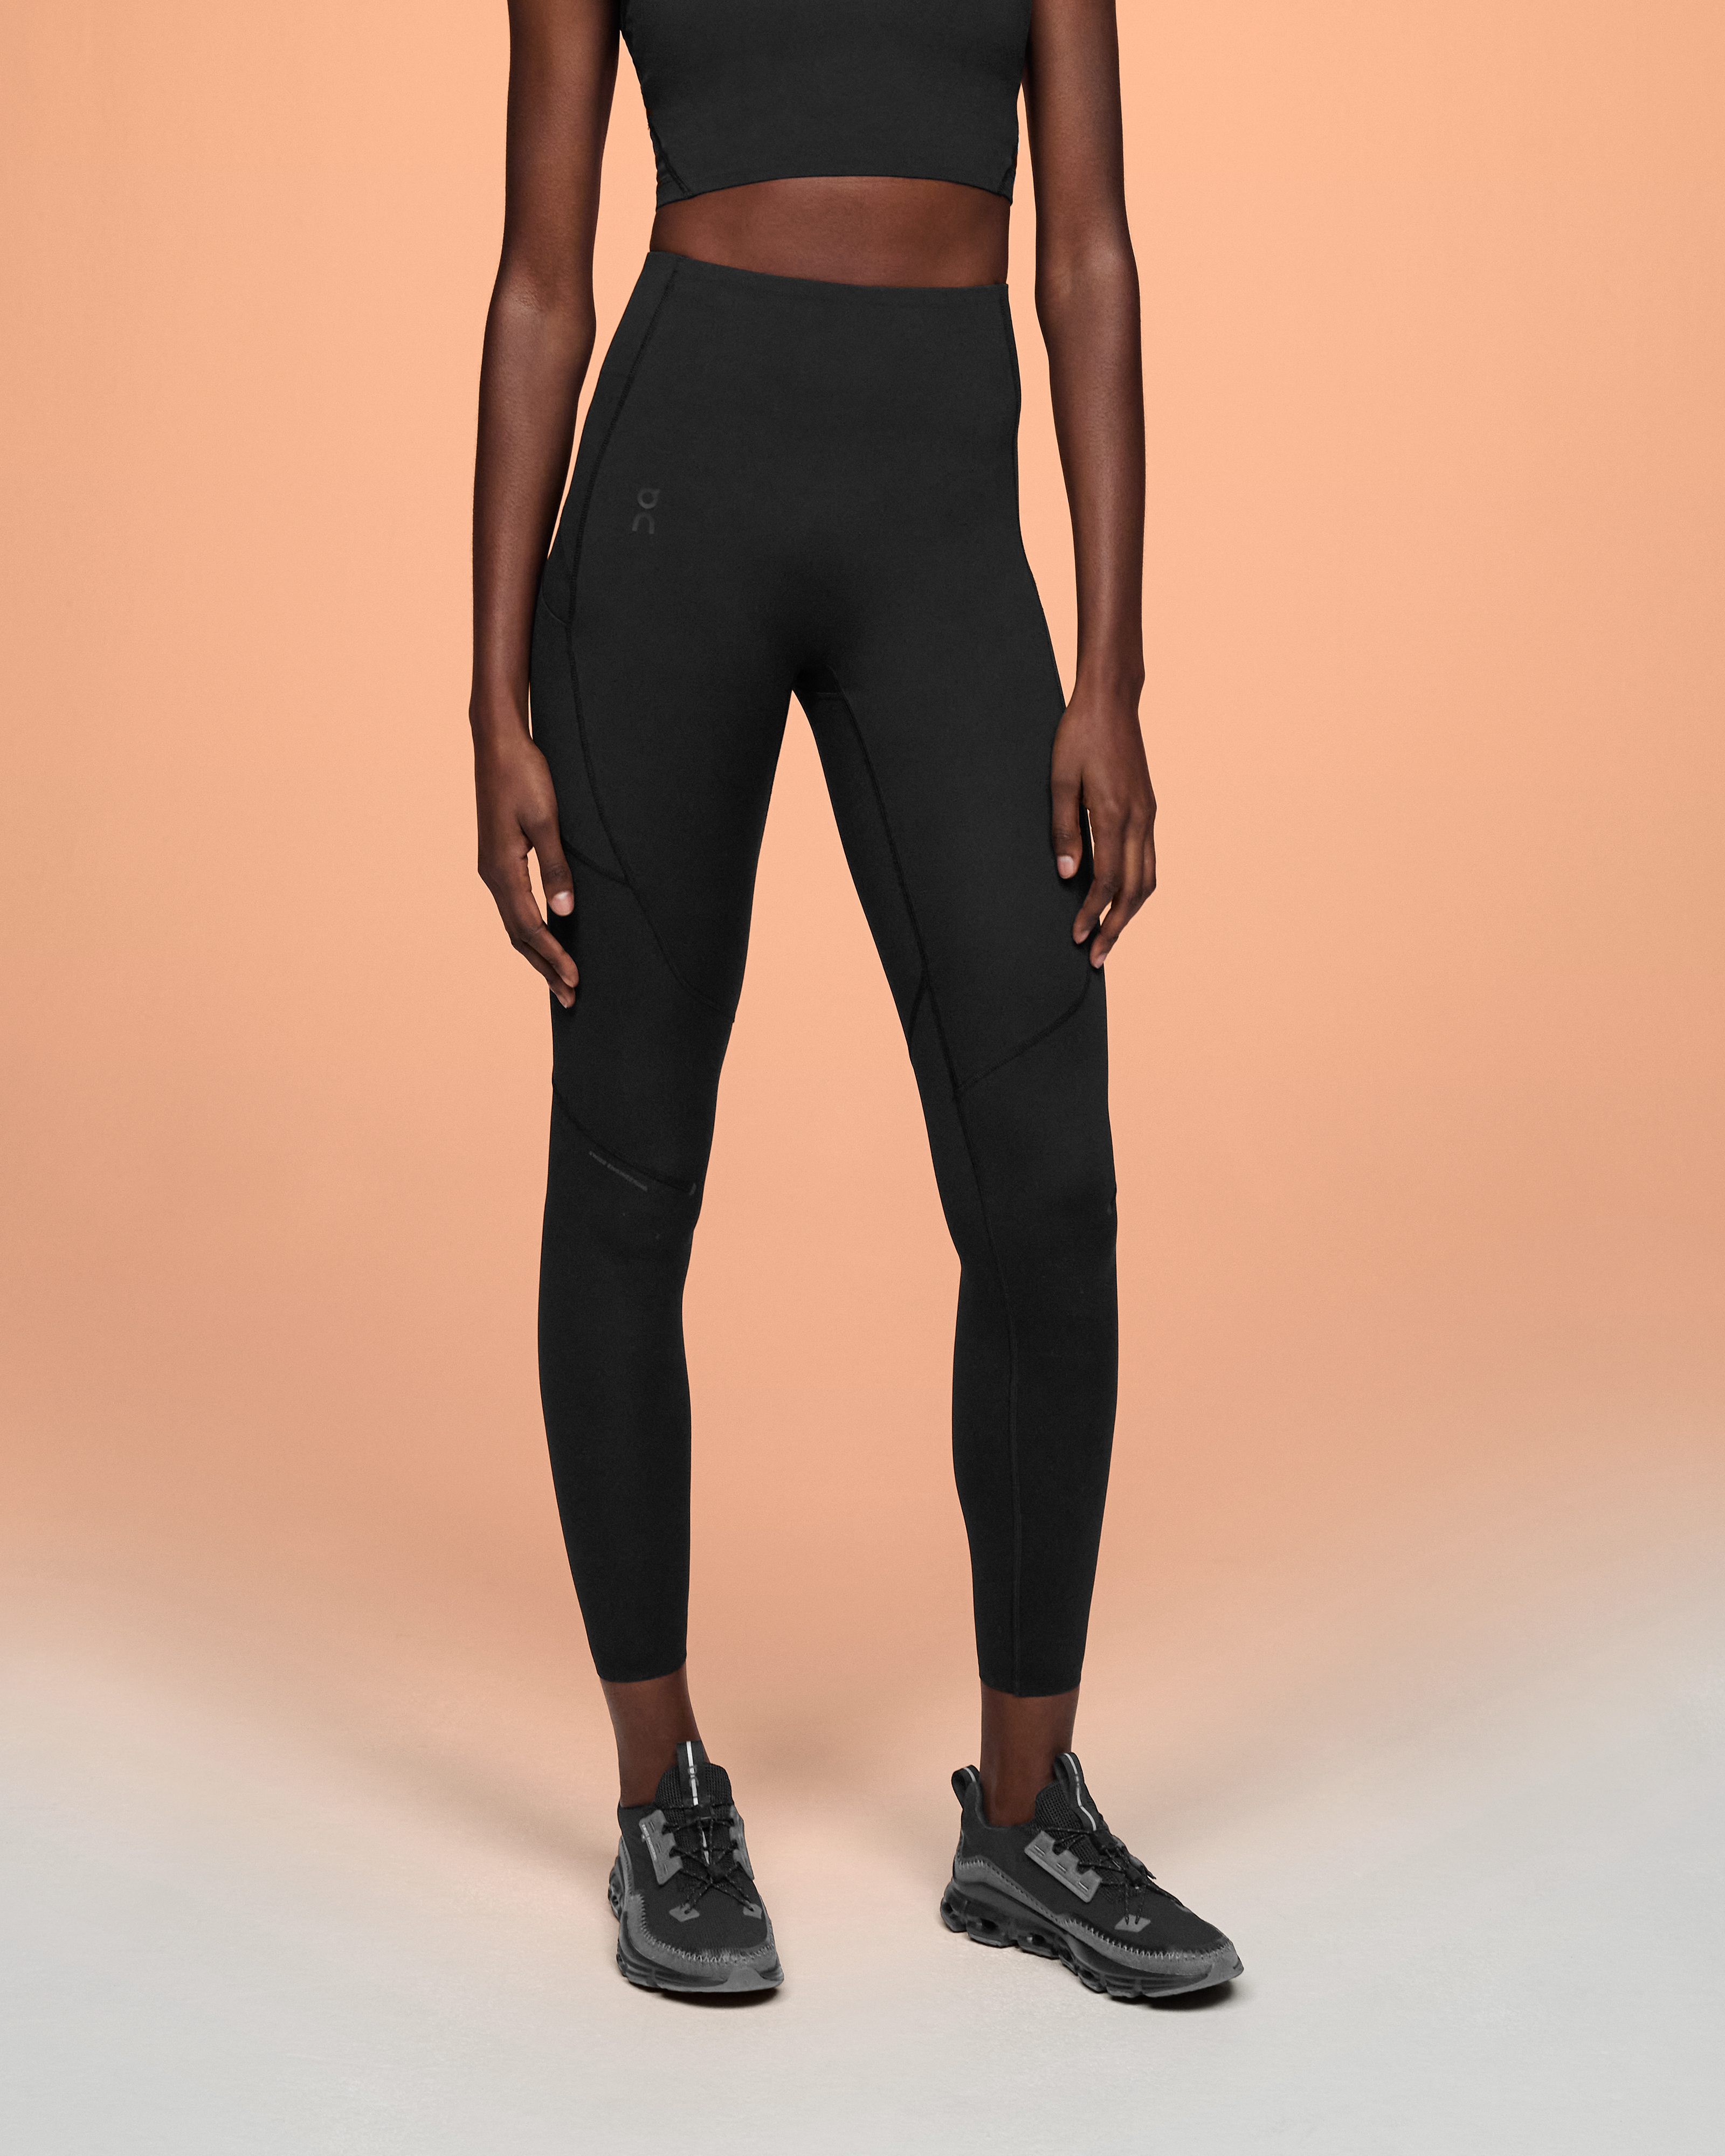 Nike Womens United States One 7/8 Tight Leggings 2.0 (Black/Speed